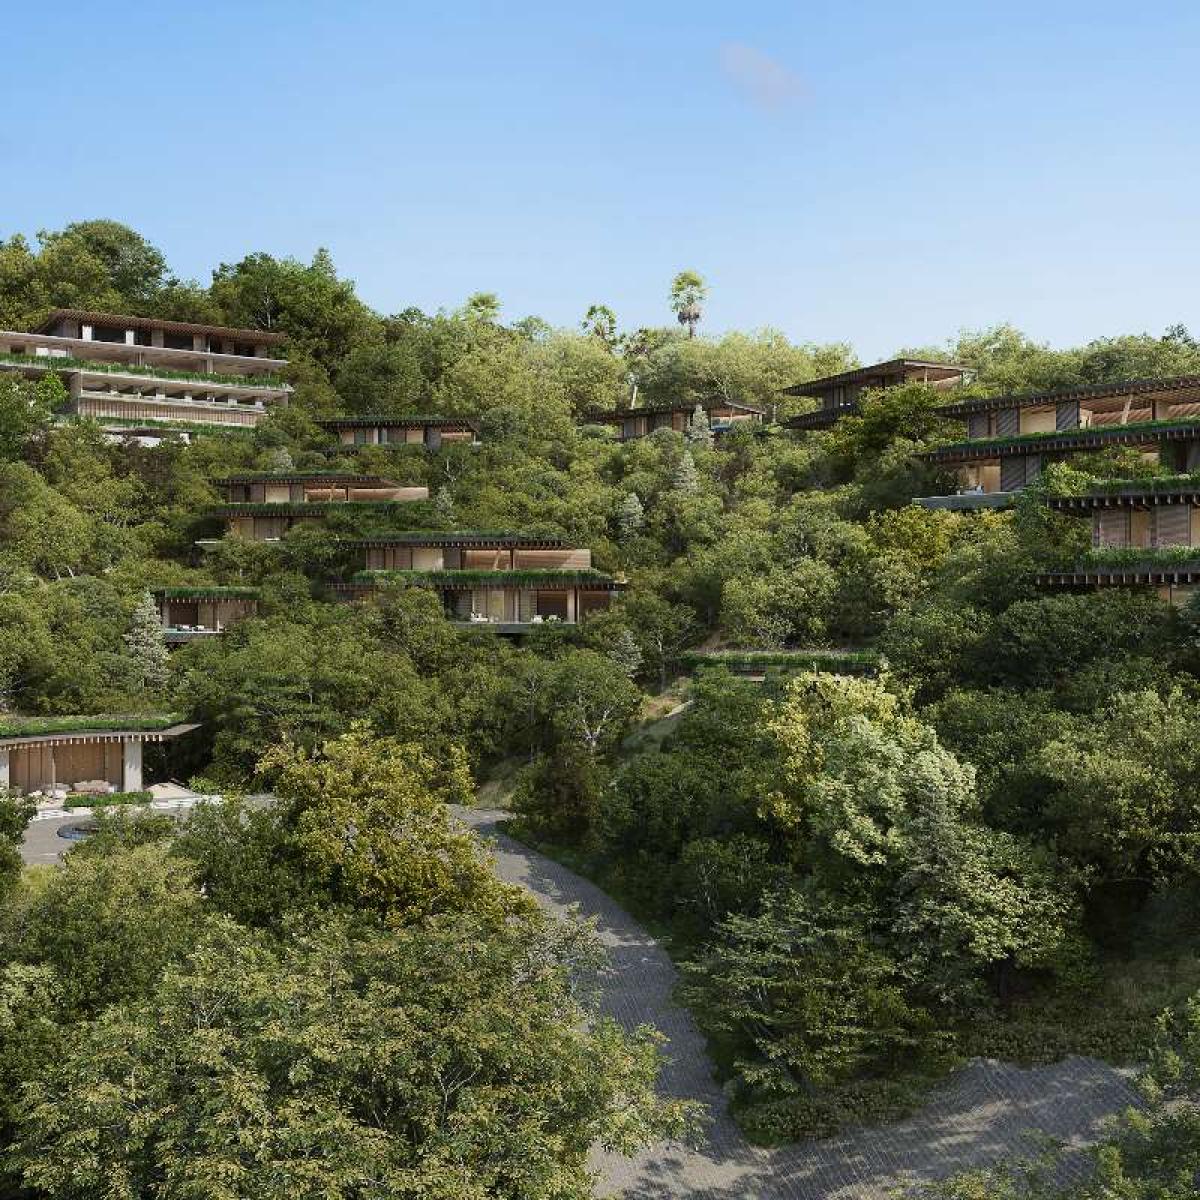 Bulgari Hotels & Resorts to partner on Benedict Canyon project | Urbanize LA